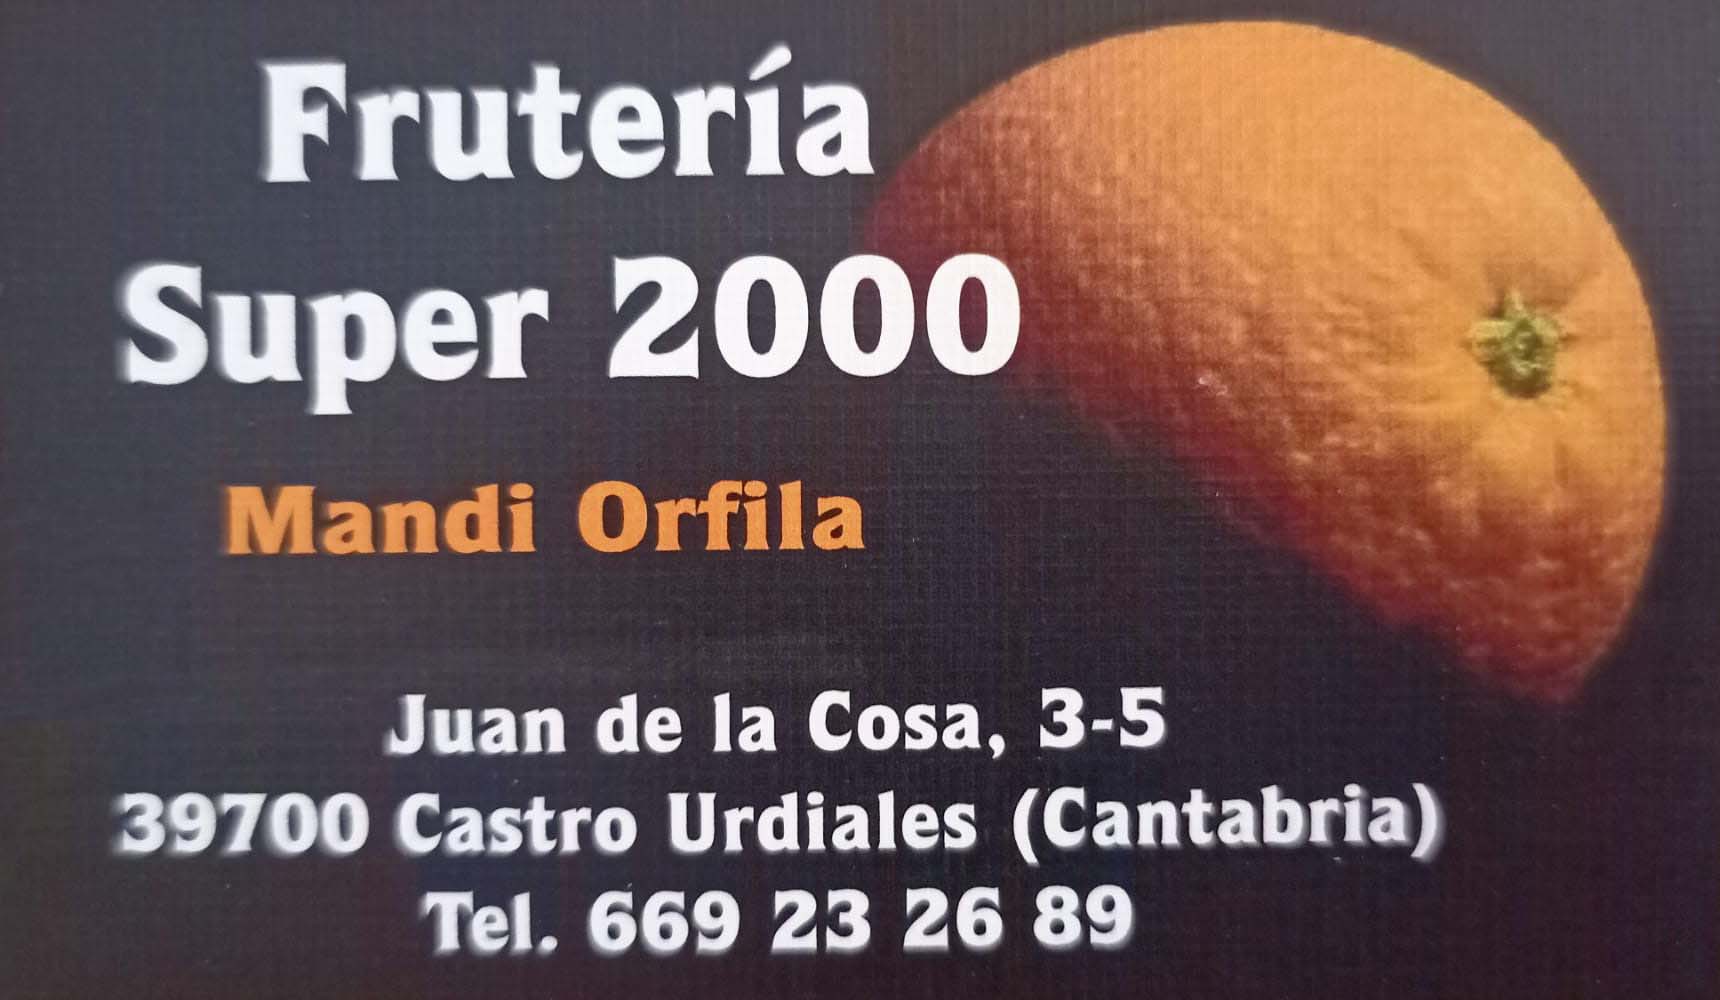 Fruteria Super 2000